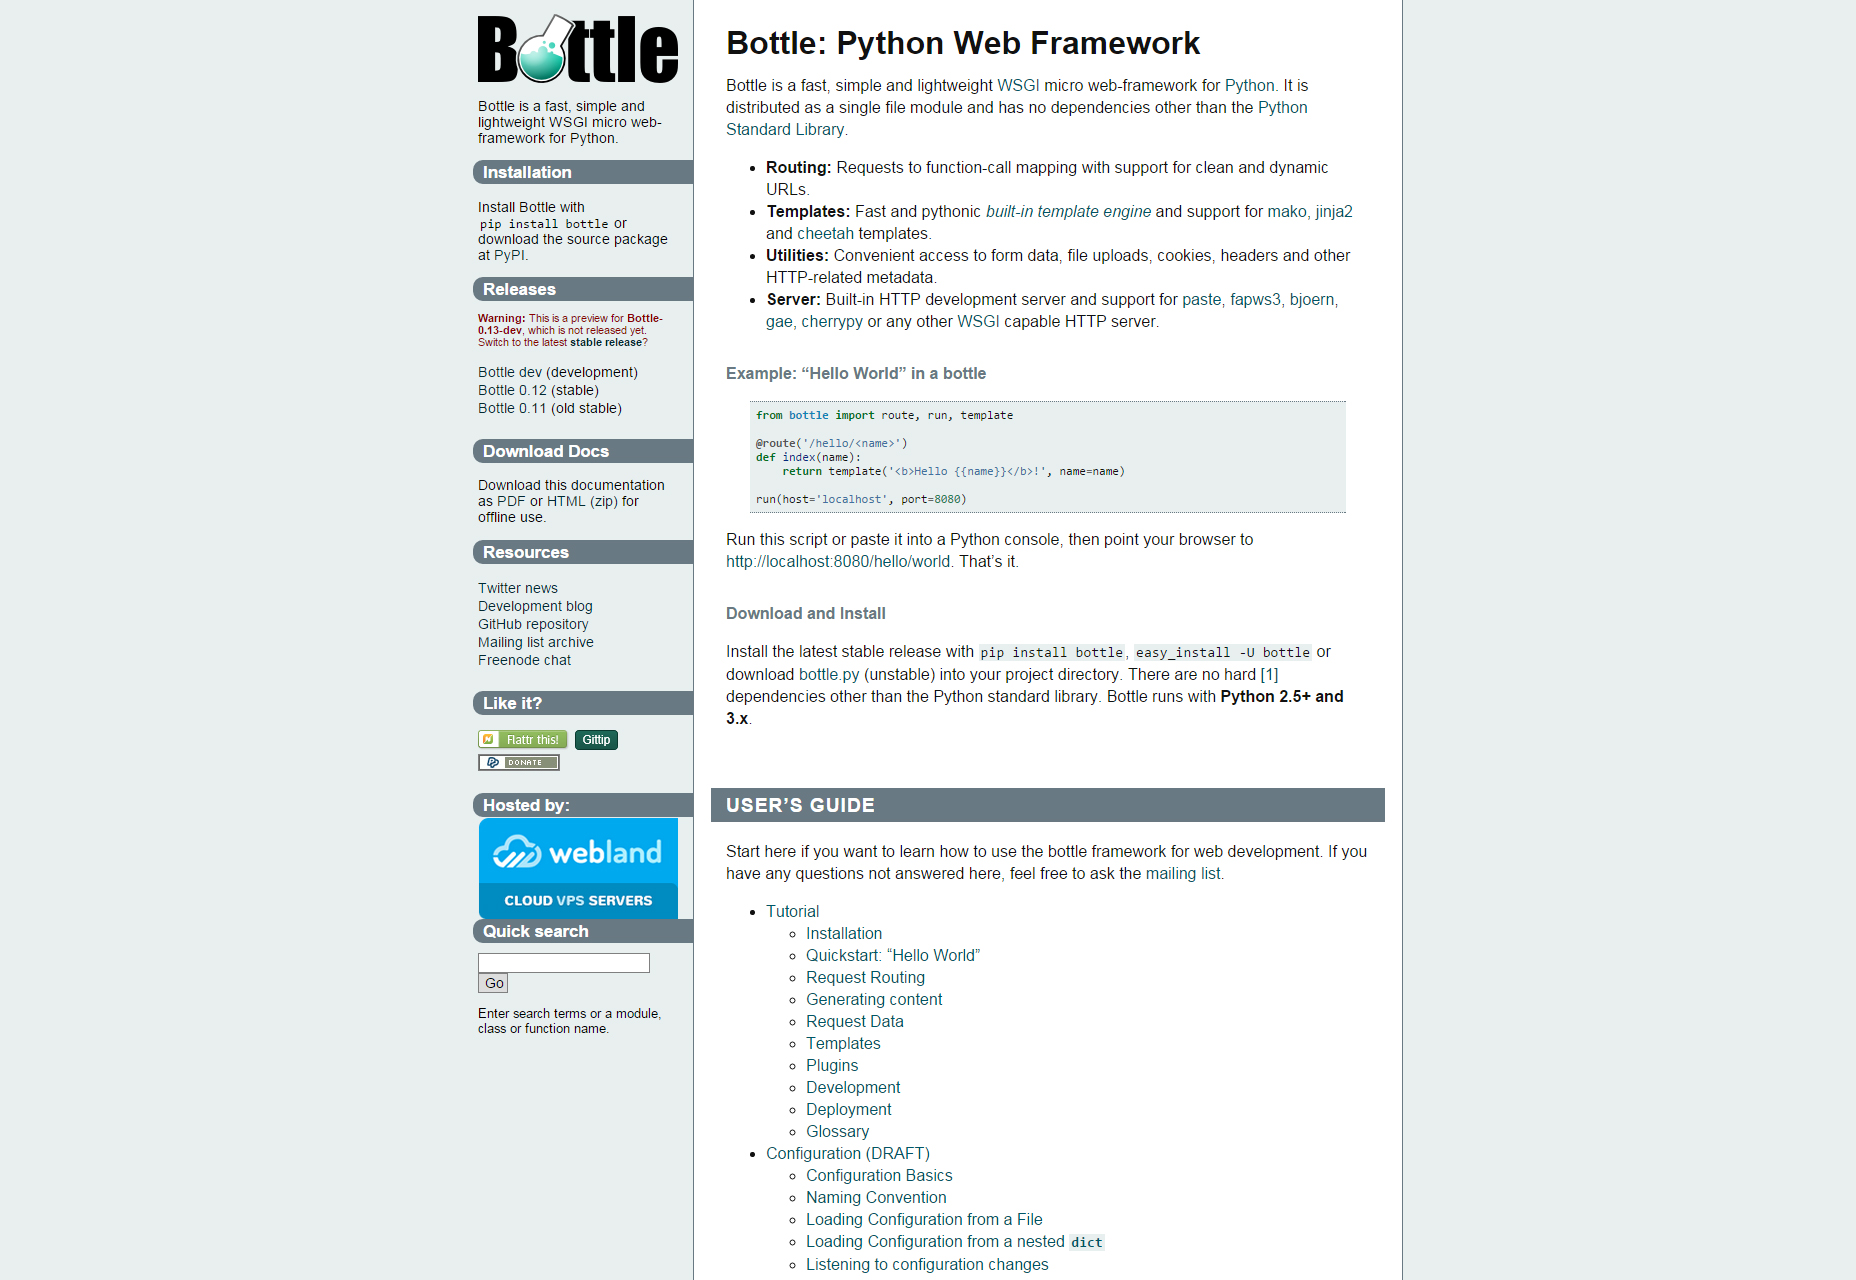 Flasche: Python Micro Web Framework